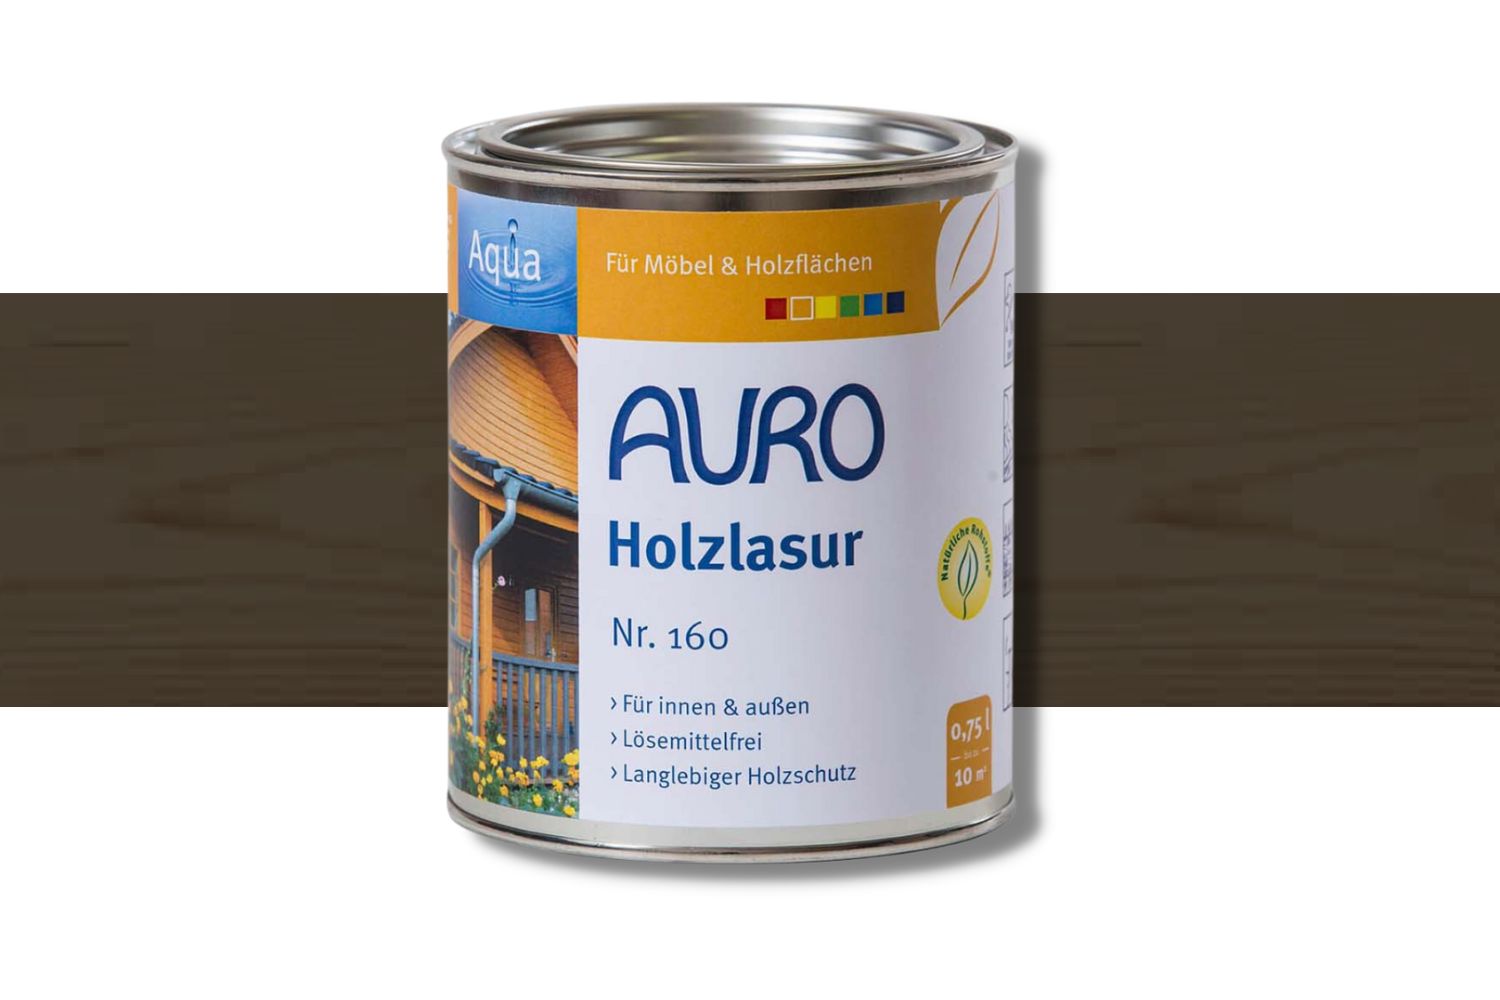  Auro Holzlasur Aqua Nr. 160